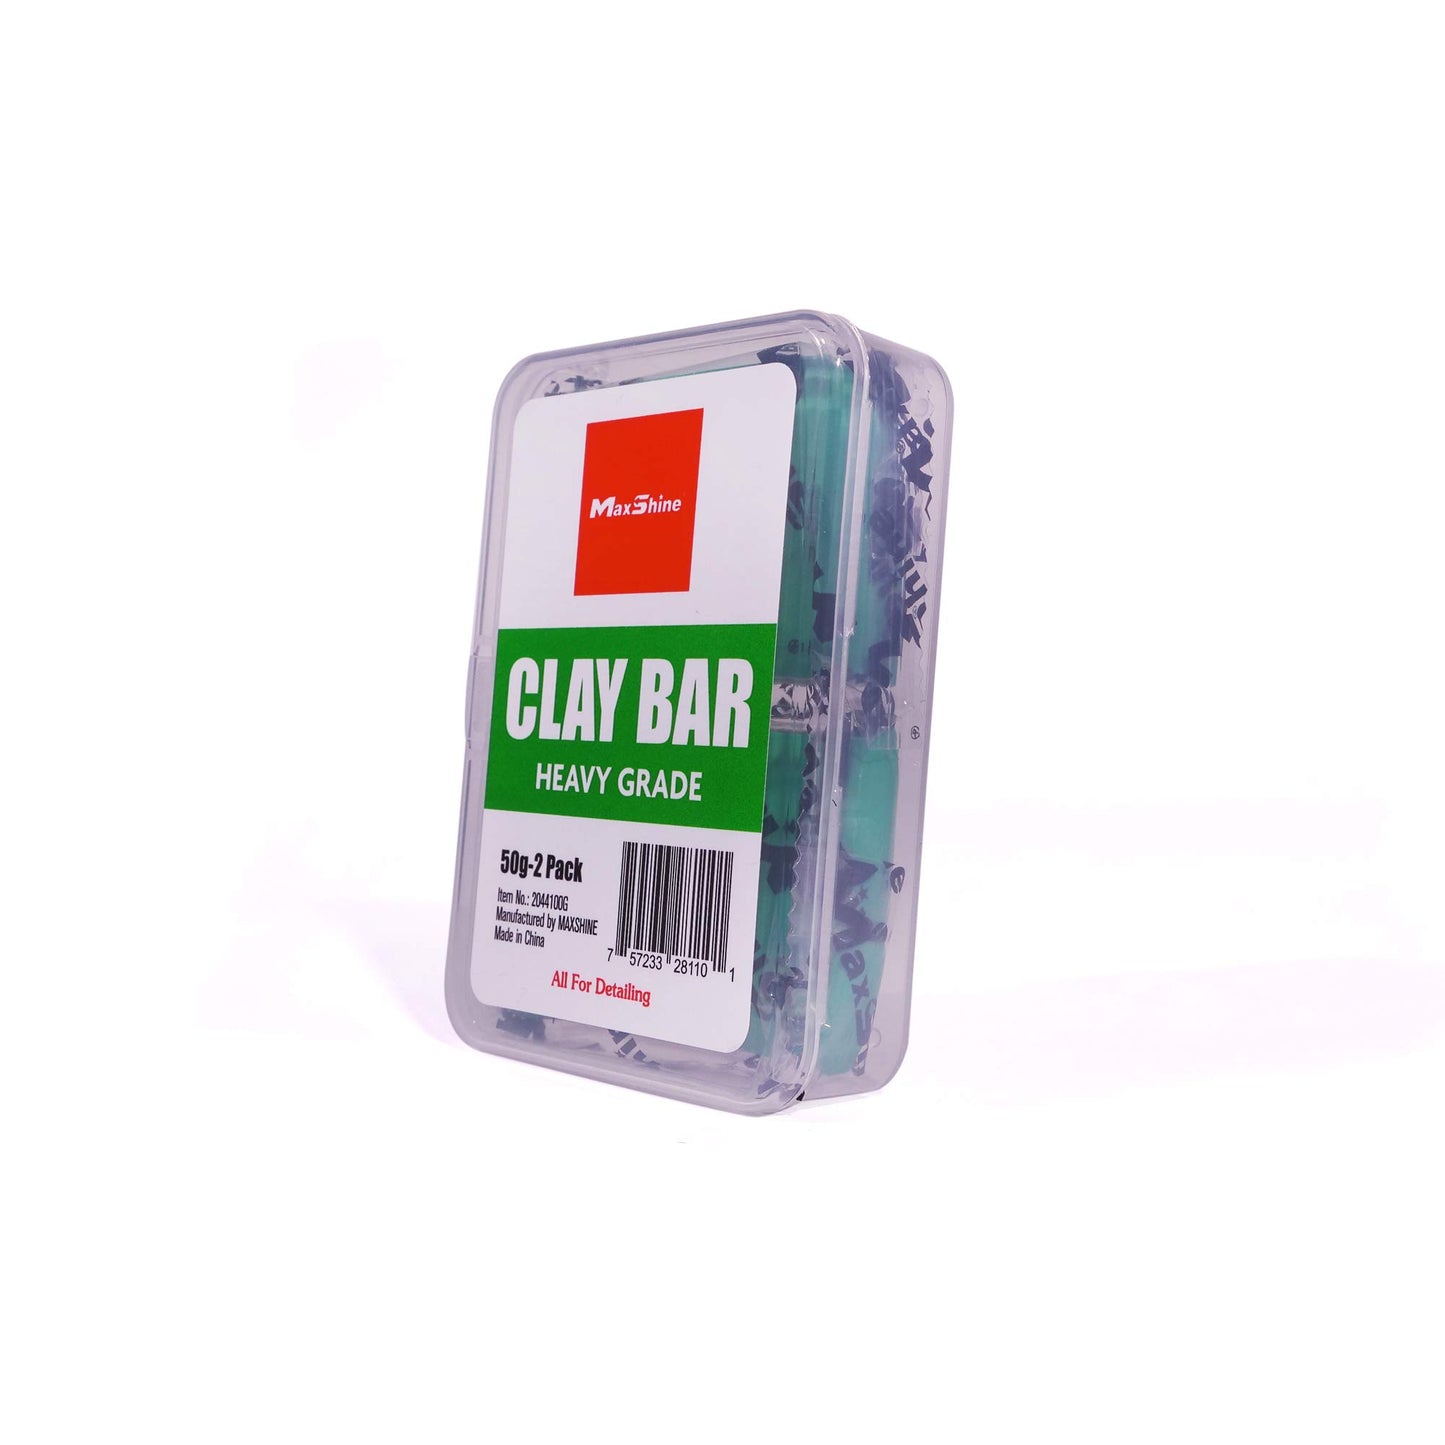 Maxshine Detailing Clay Bar 2pack 100g(2x50g) Car Detailing Bars, Heavy Grade Material-Clean Wash Green Bars and Remove Surface Contaminants Easily Green Clay Bar